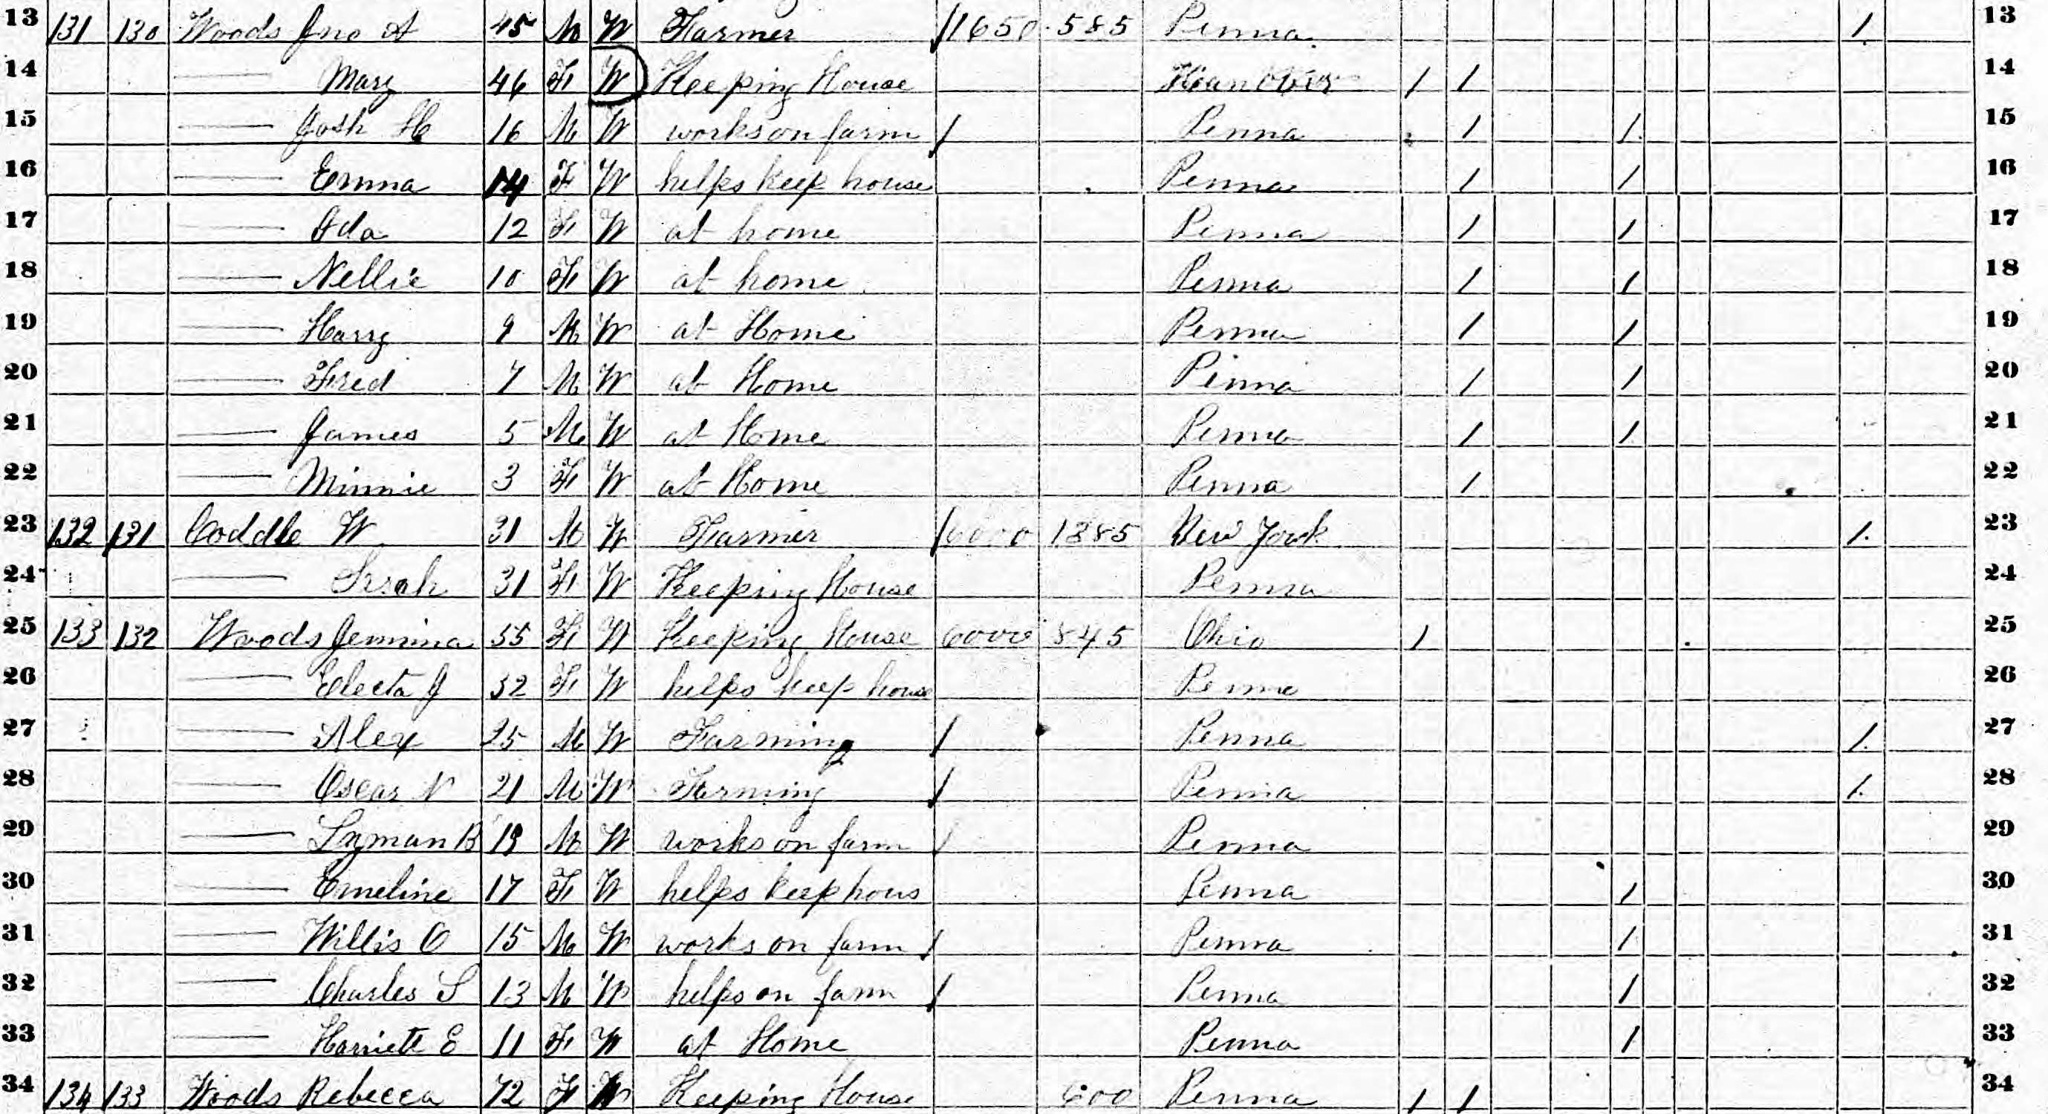 Jemima Woods 1870 Census